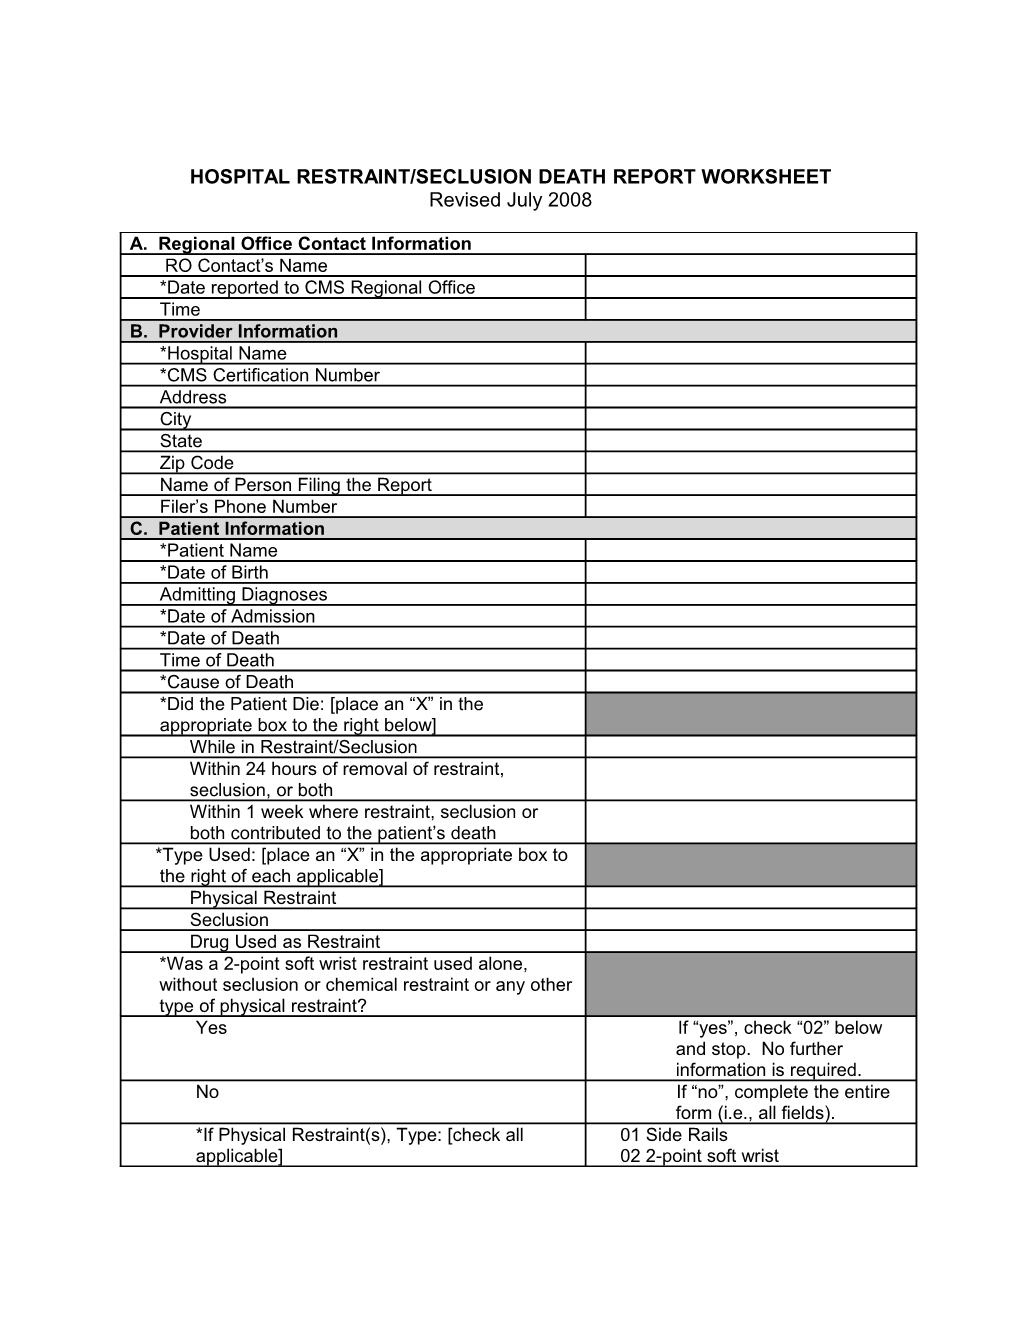 Hospital Restraint/Seclusion Death Report Worksheet